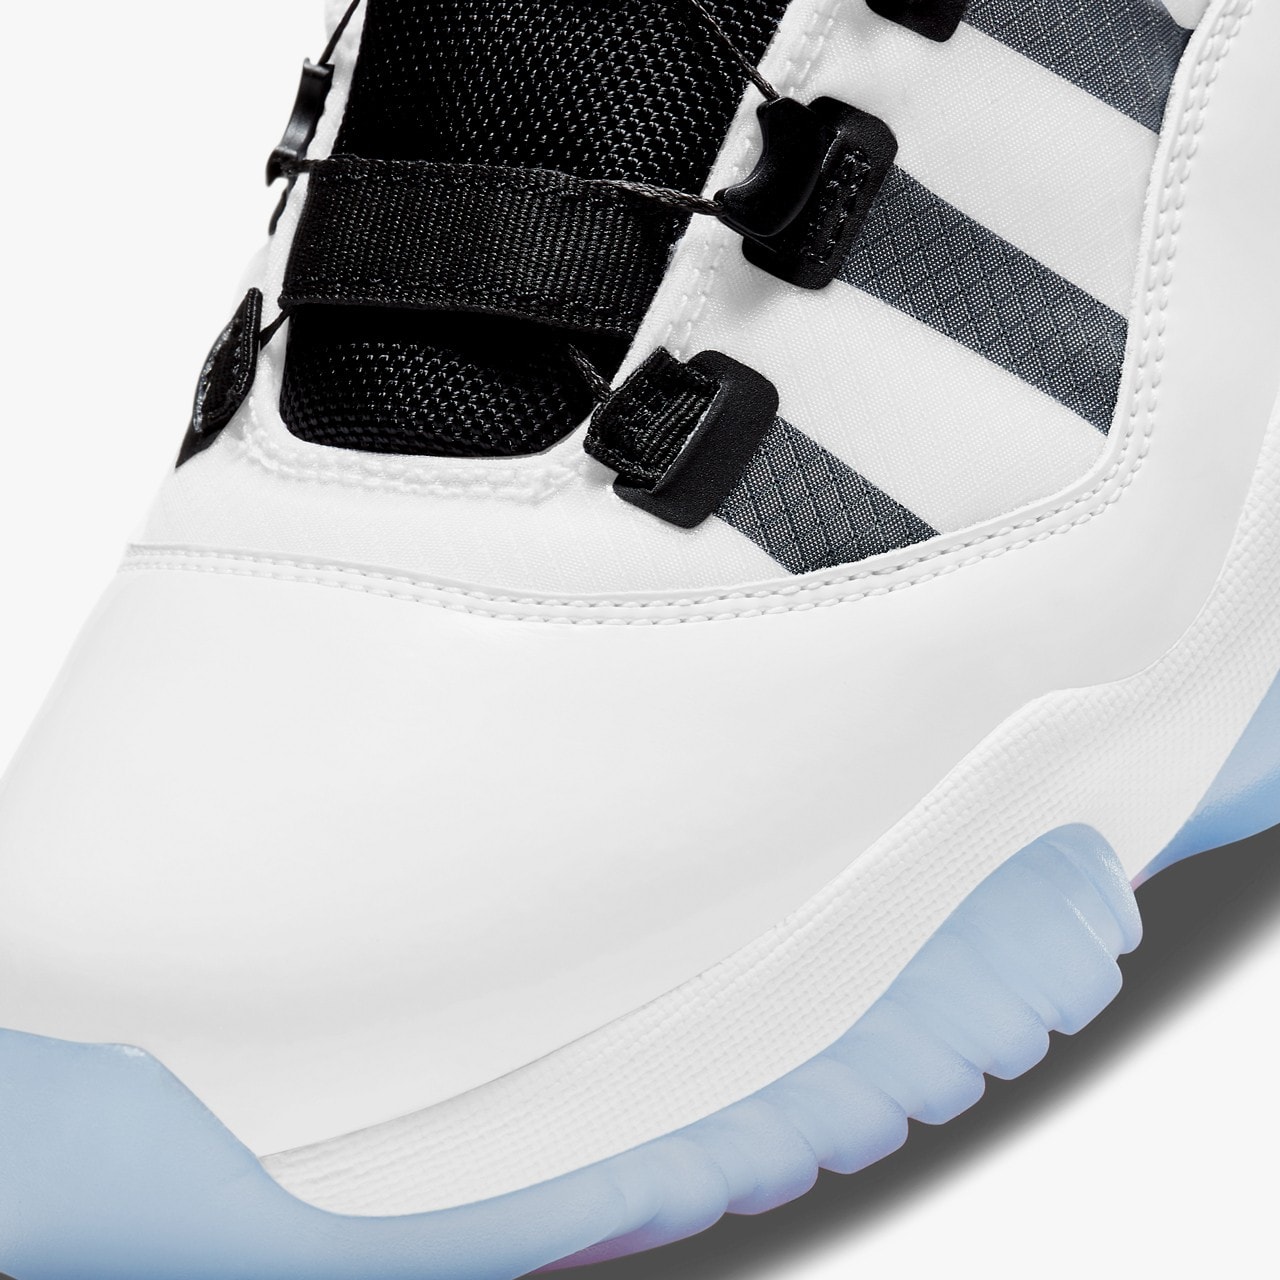 Air Jordan 11 Adapt 自動綁帶鞋款官方圖輯、發售情報公佈